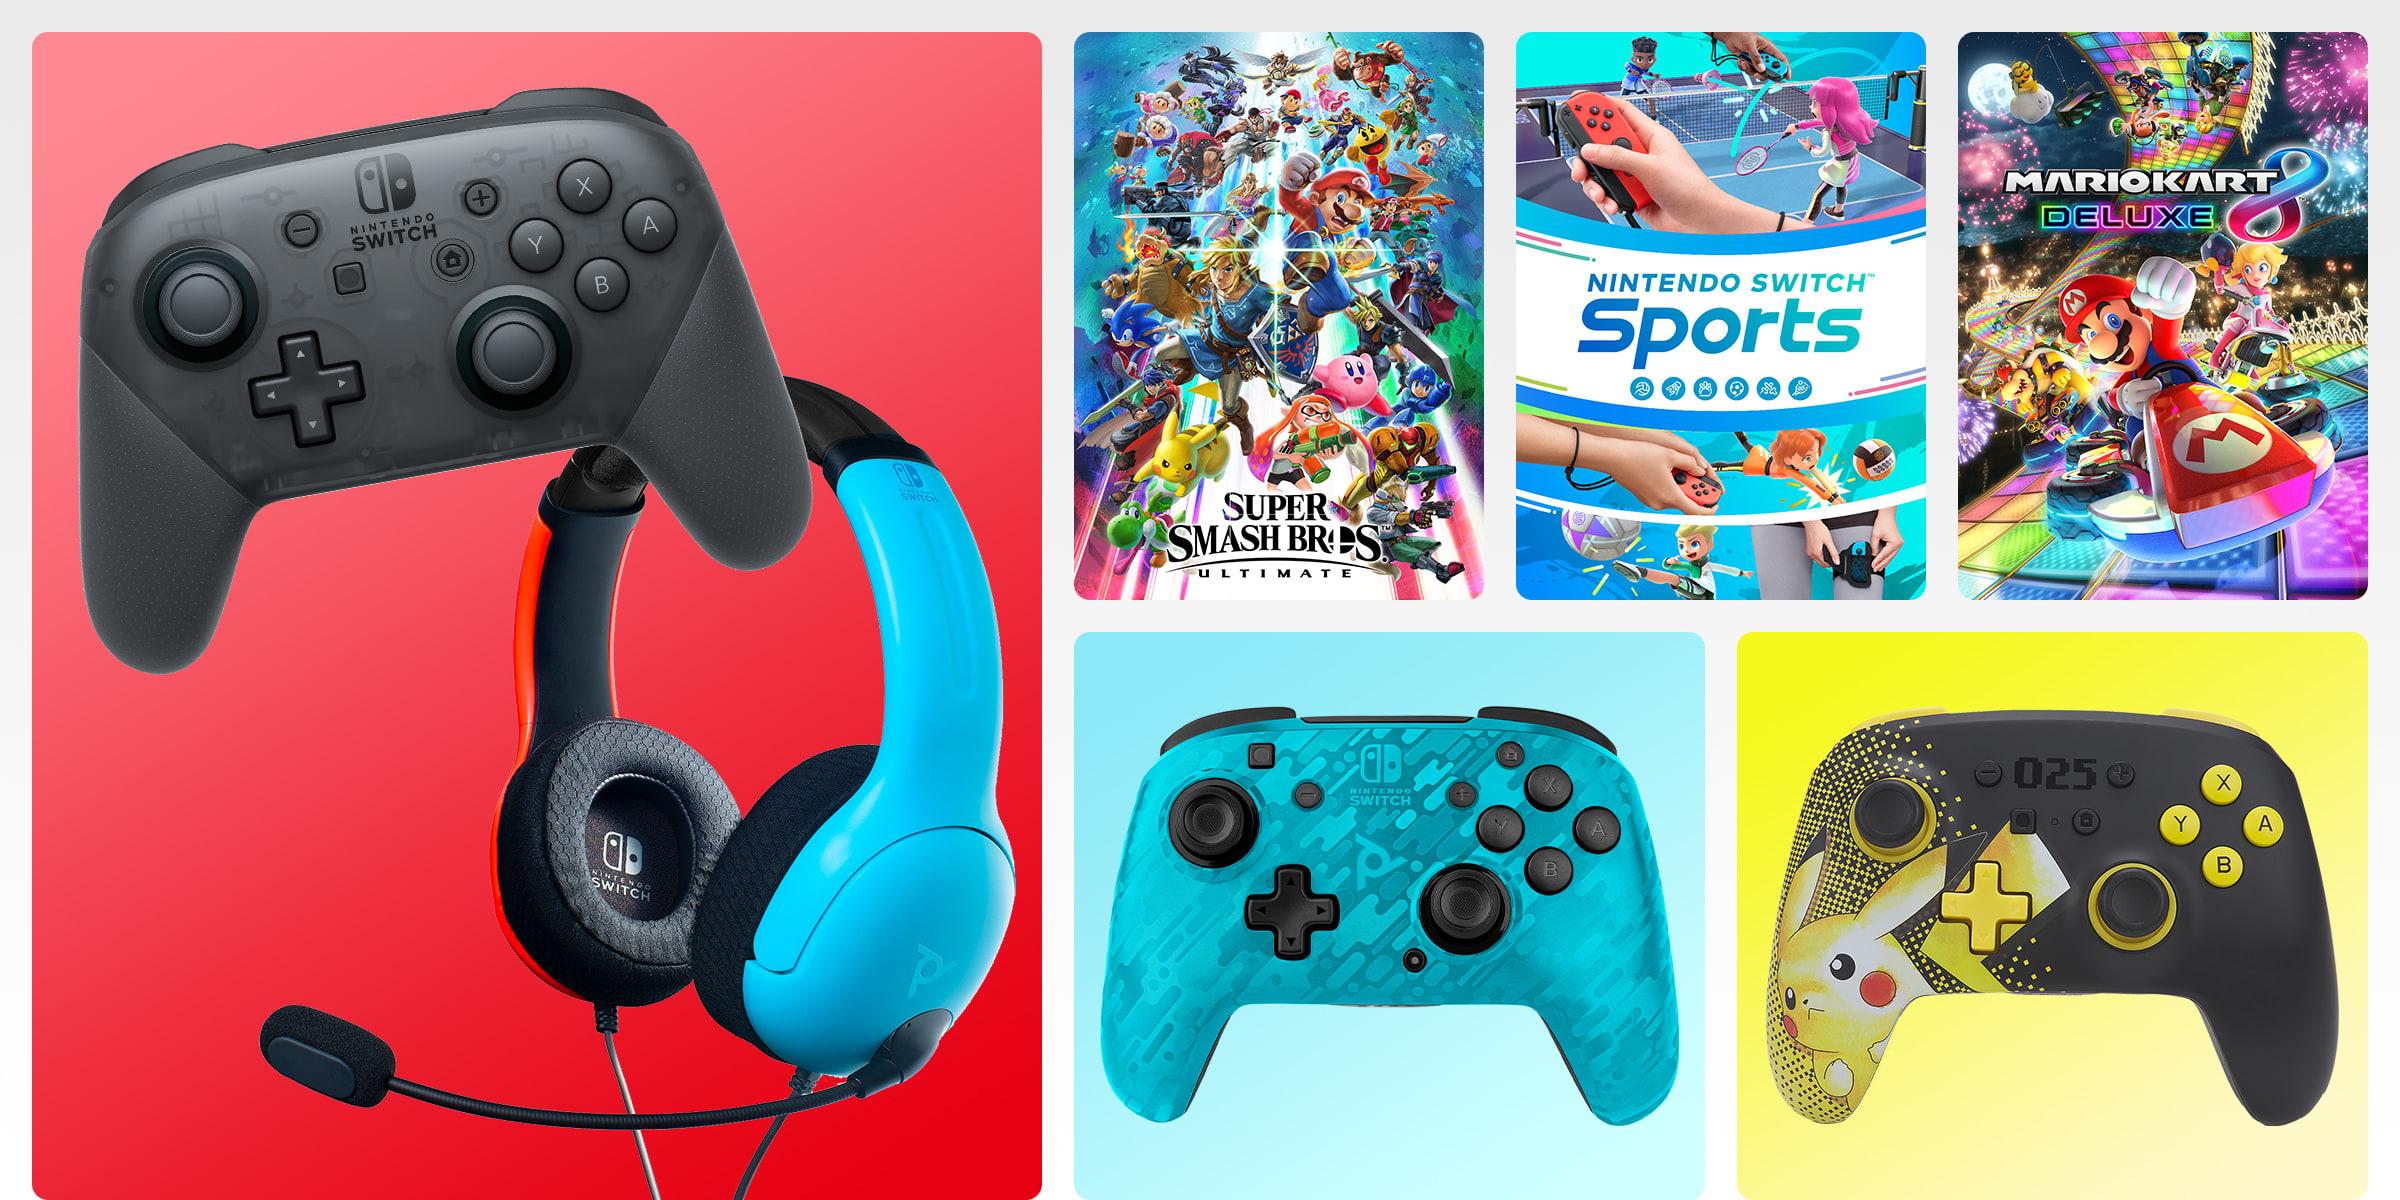 Competitive fun - Nintendo Pro Controller, headset, Super Smash Bros. Ultimate, Nintendo Switch Sports, Mario Kart 8 Deluxe